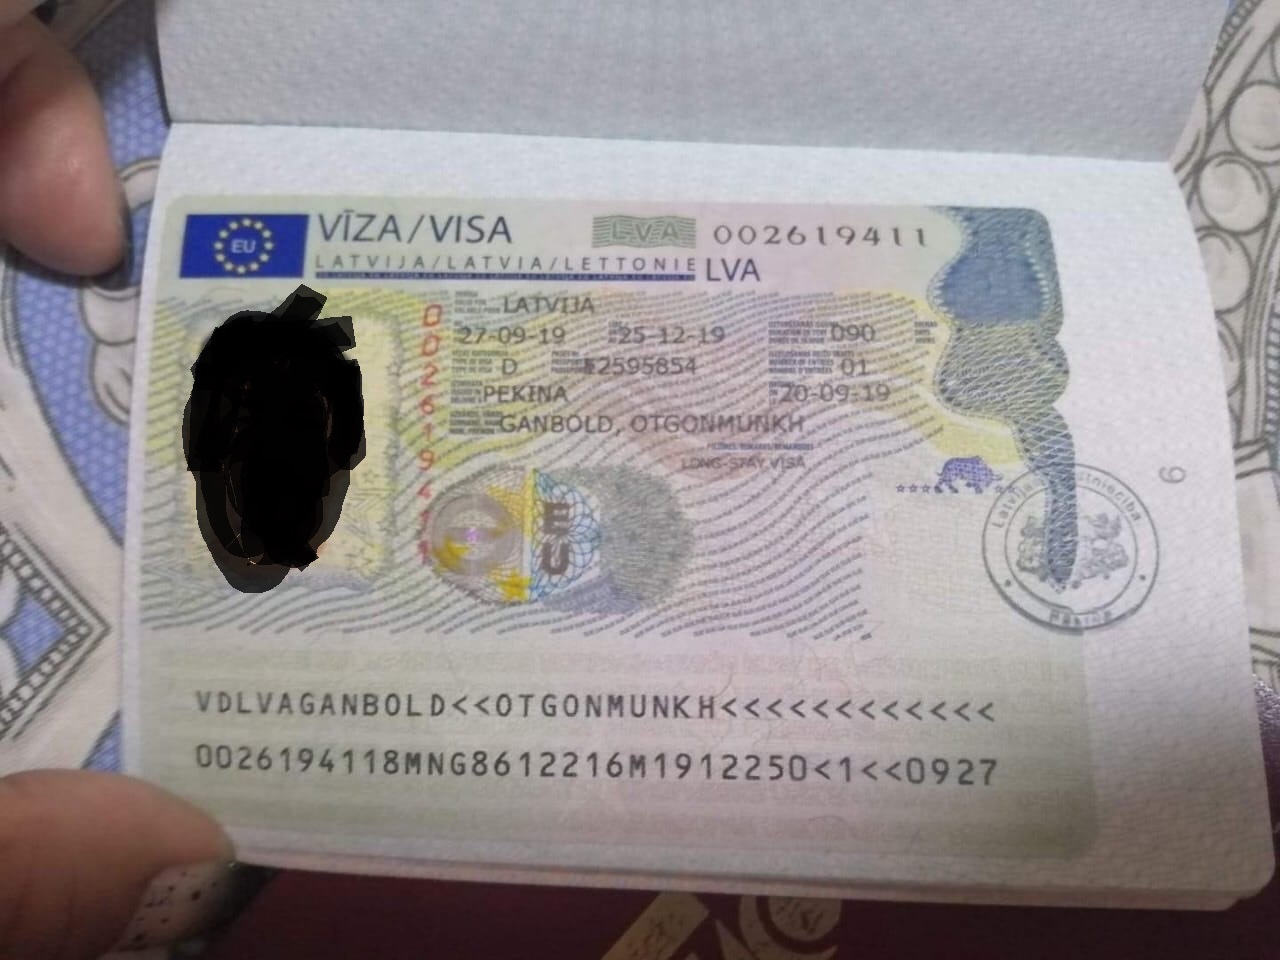 How to get Latvia visa from Nigeria